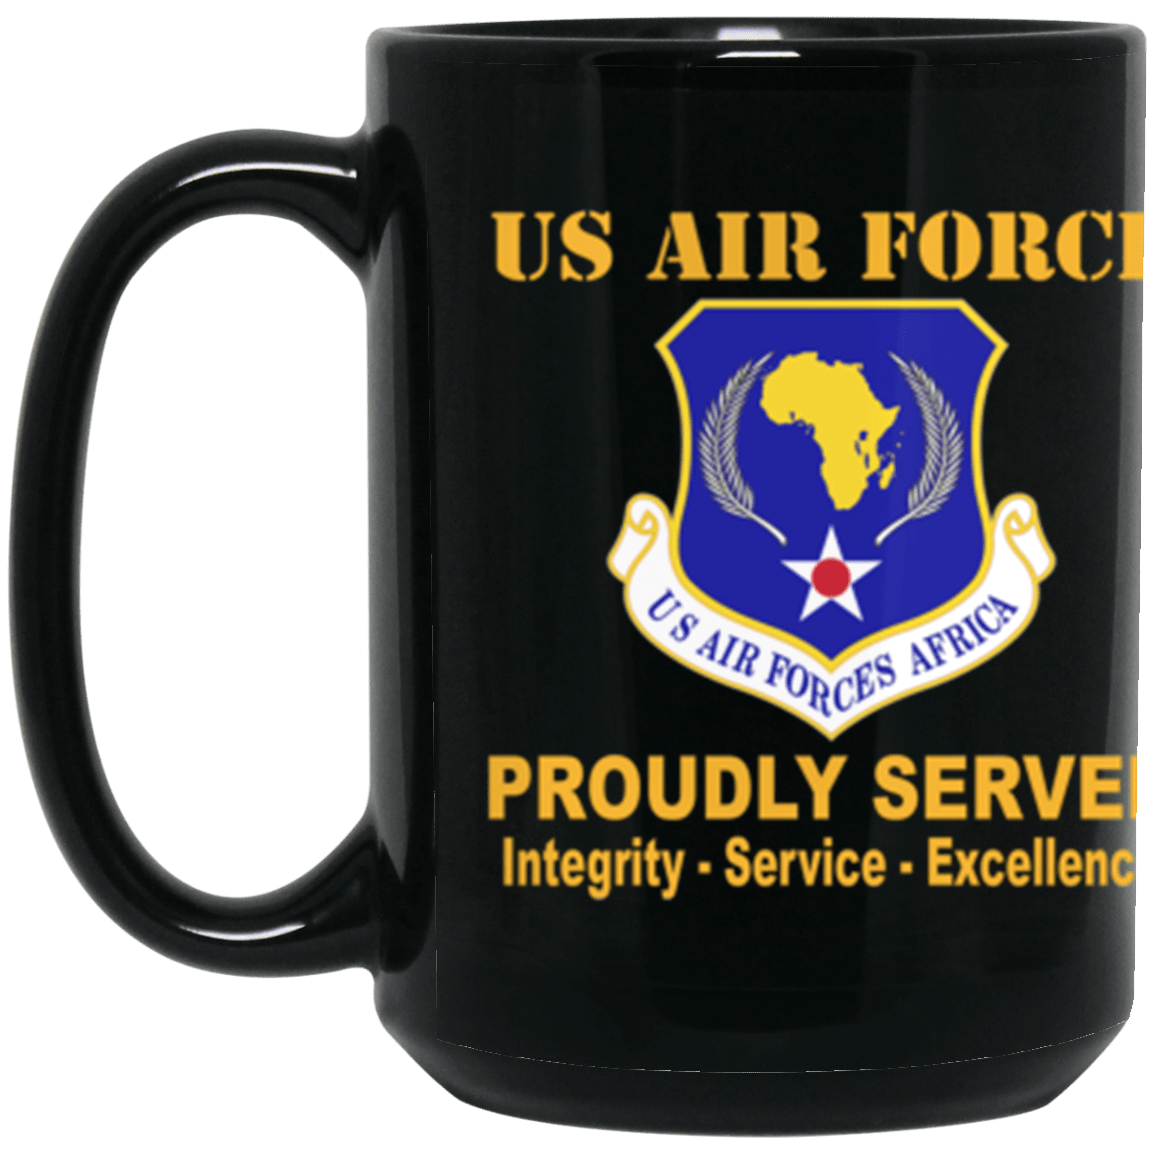 US Air Force Alaskan Air Command Proudly Served Core Values 15 oz. Black Mug-Mug-USAF-Veterans Nation